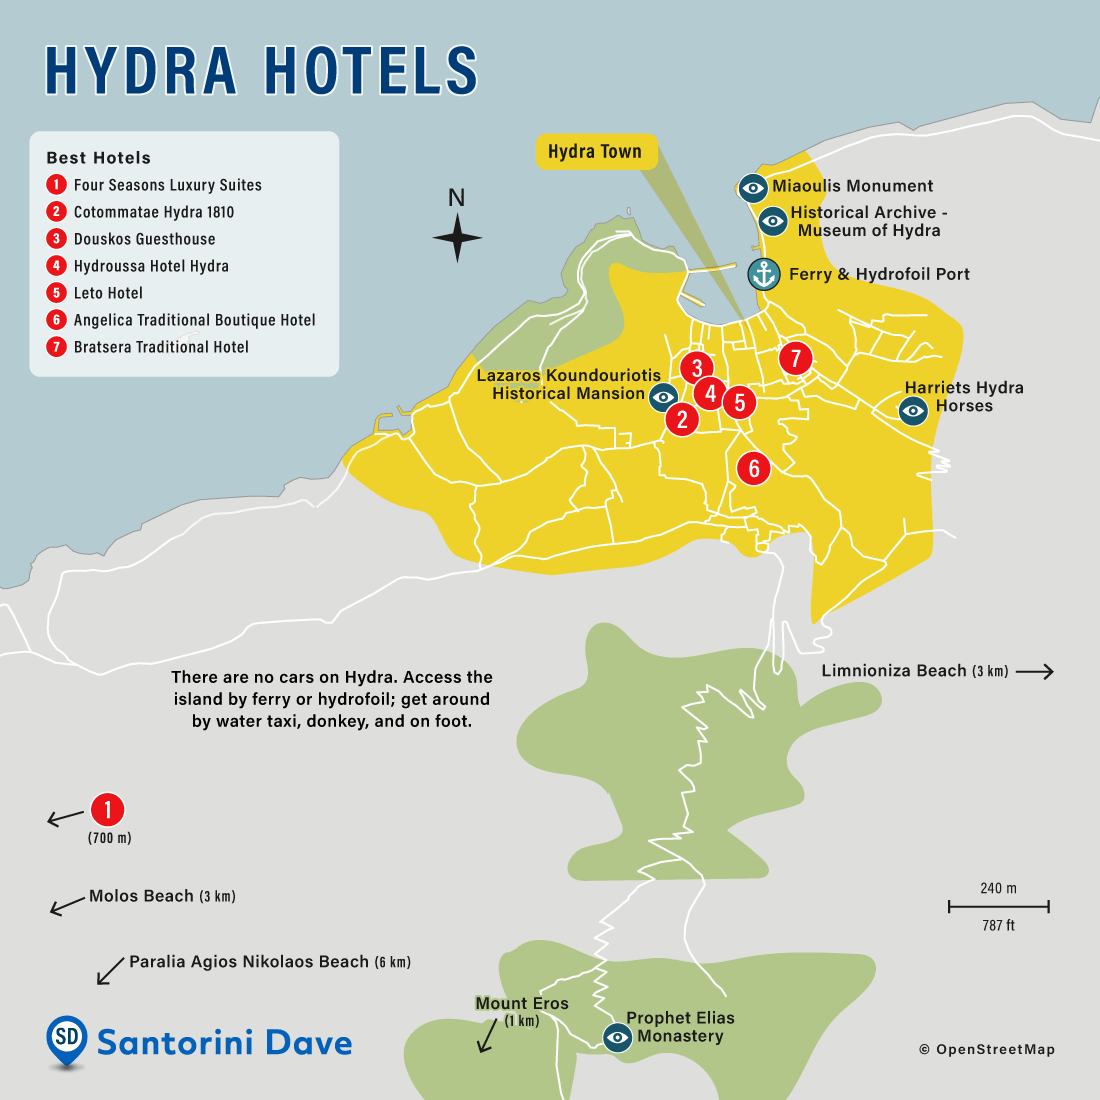 Map of Hydra Hotels and Neighborhoods